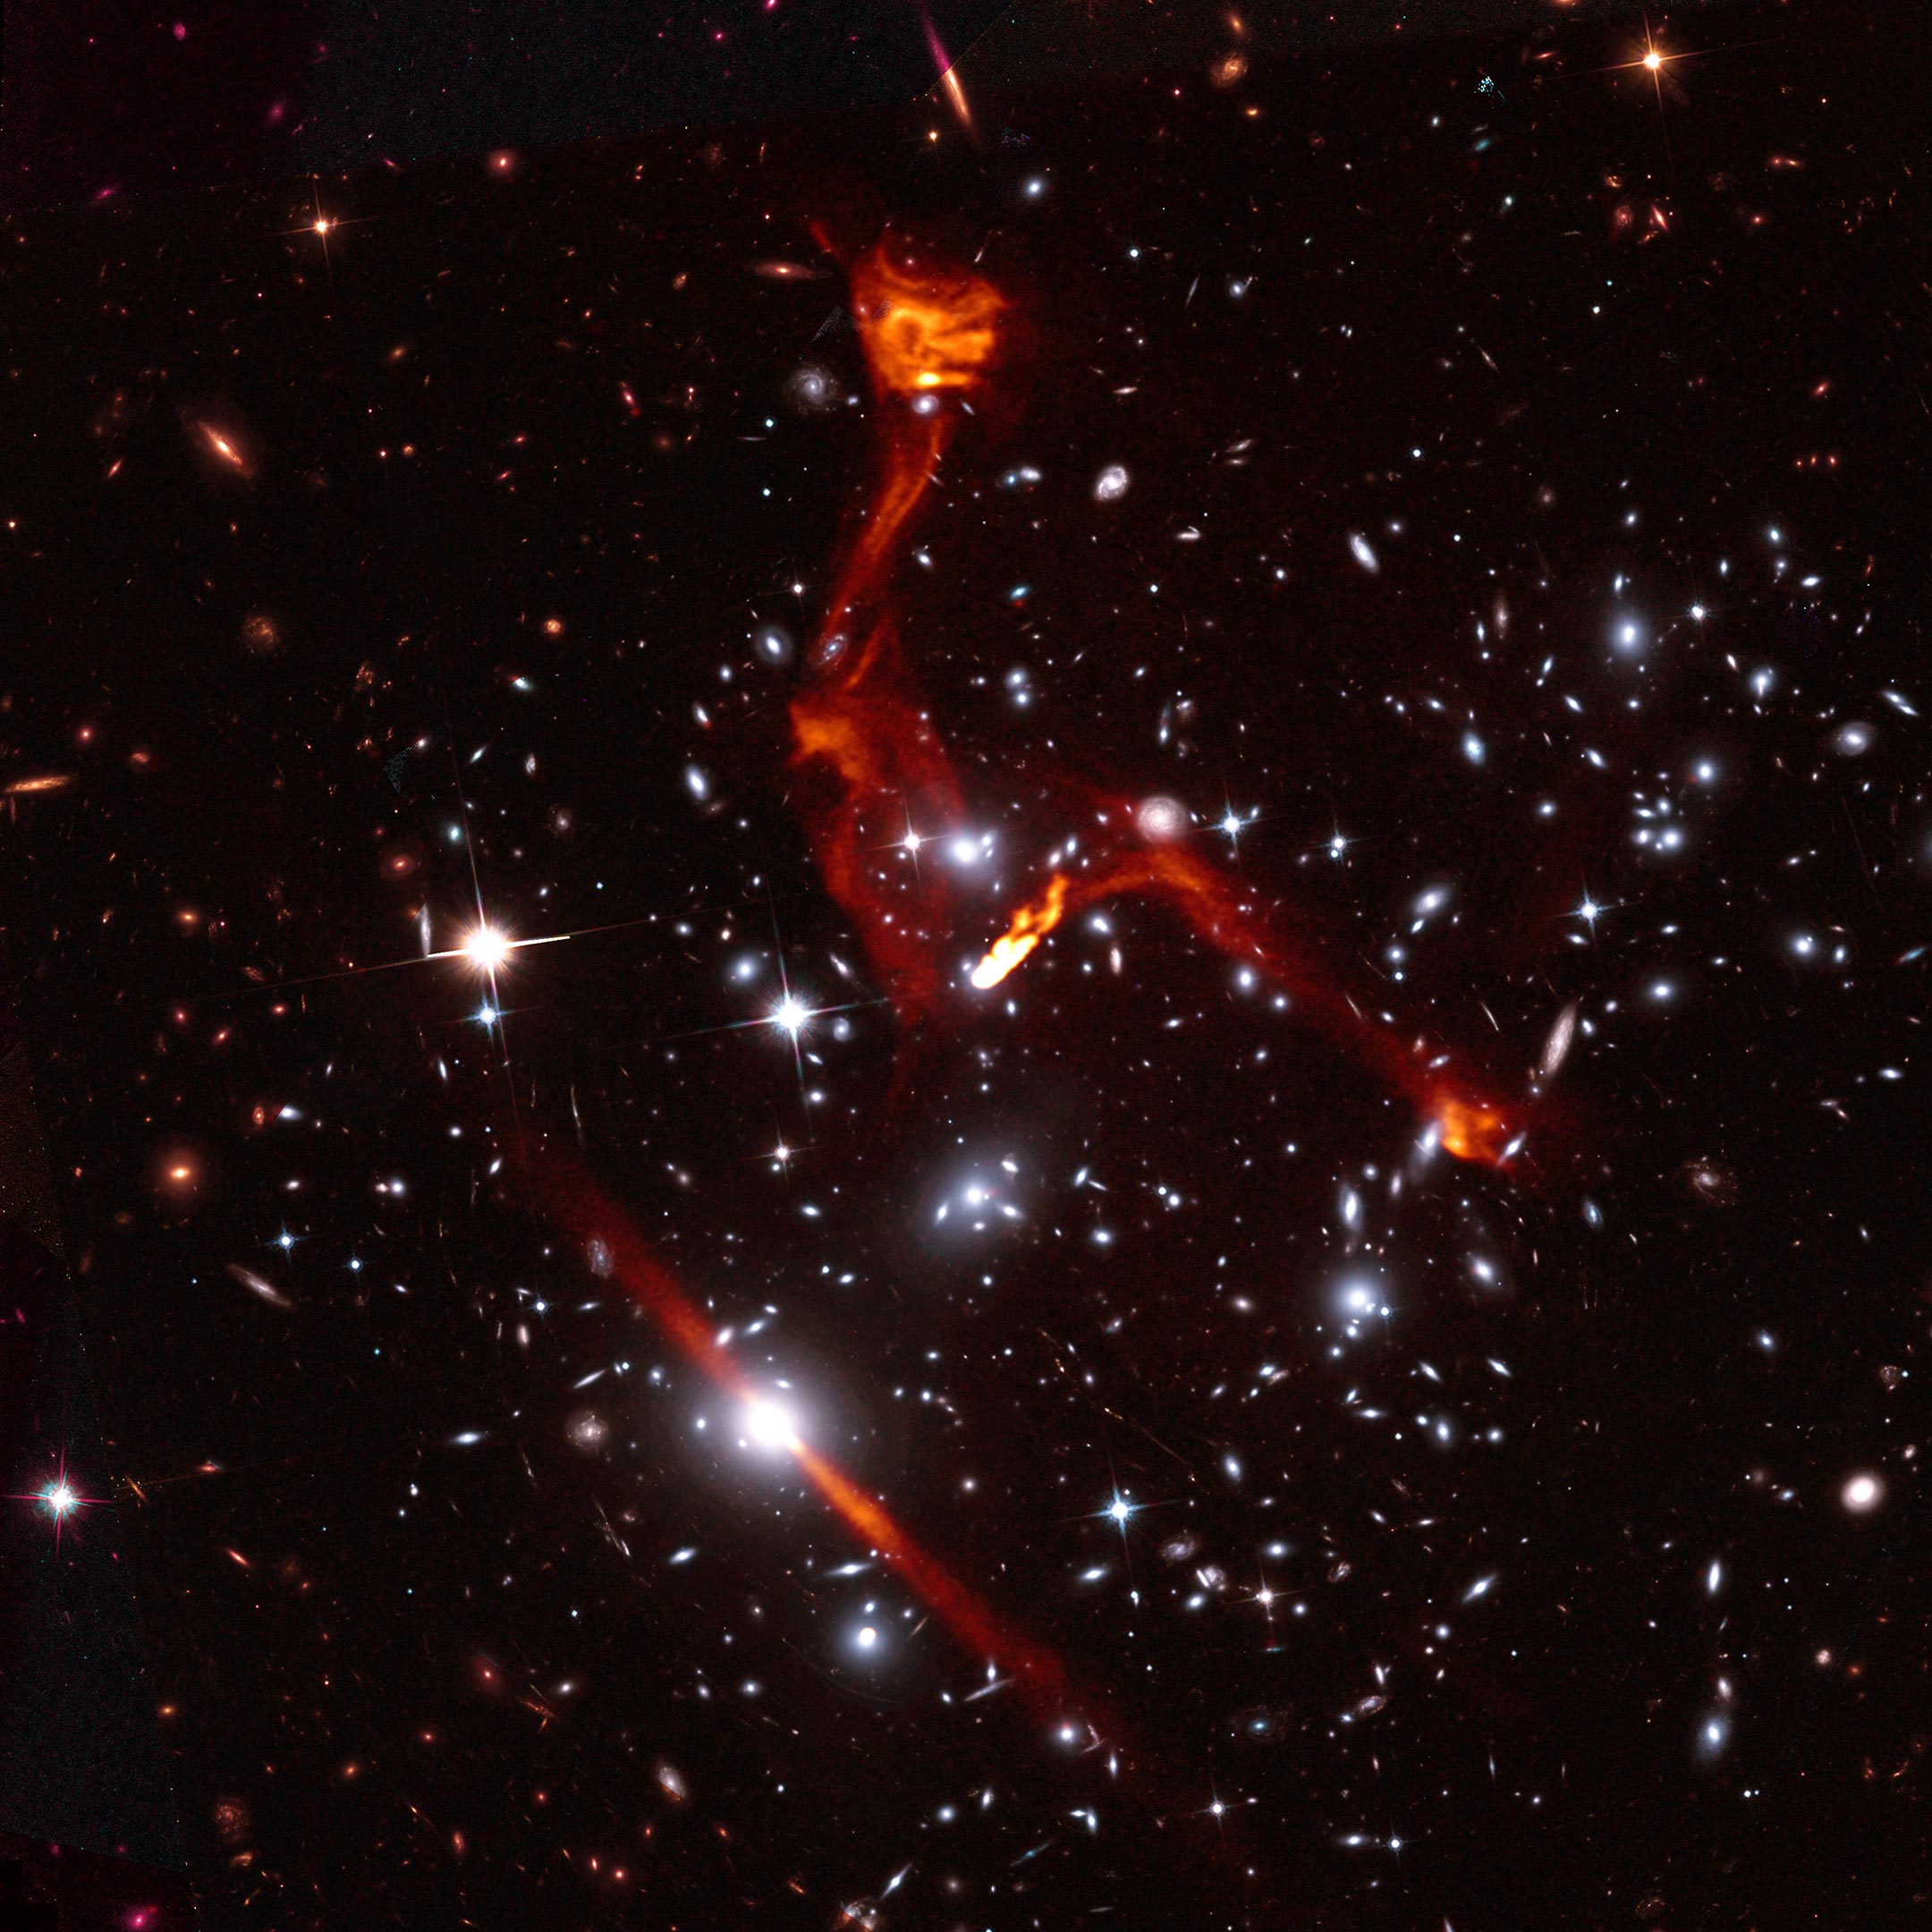 Cosmic Lens Reveals Faint Radio Galaxy More Than 8 Billion Light